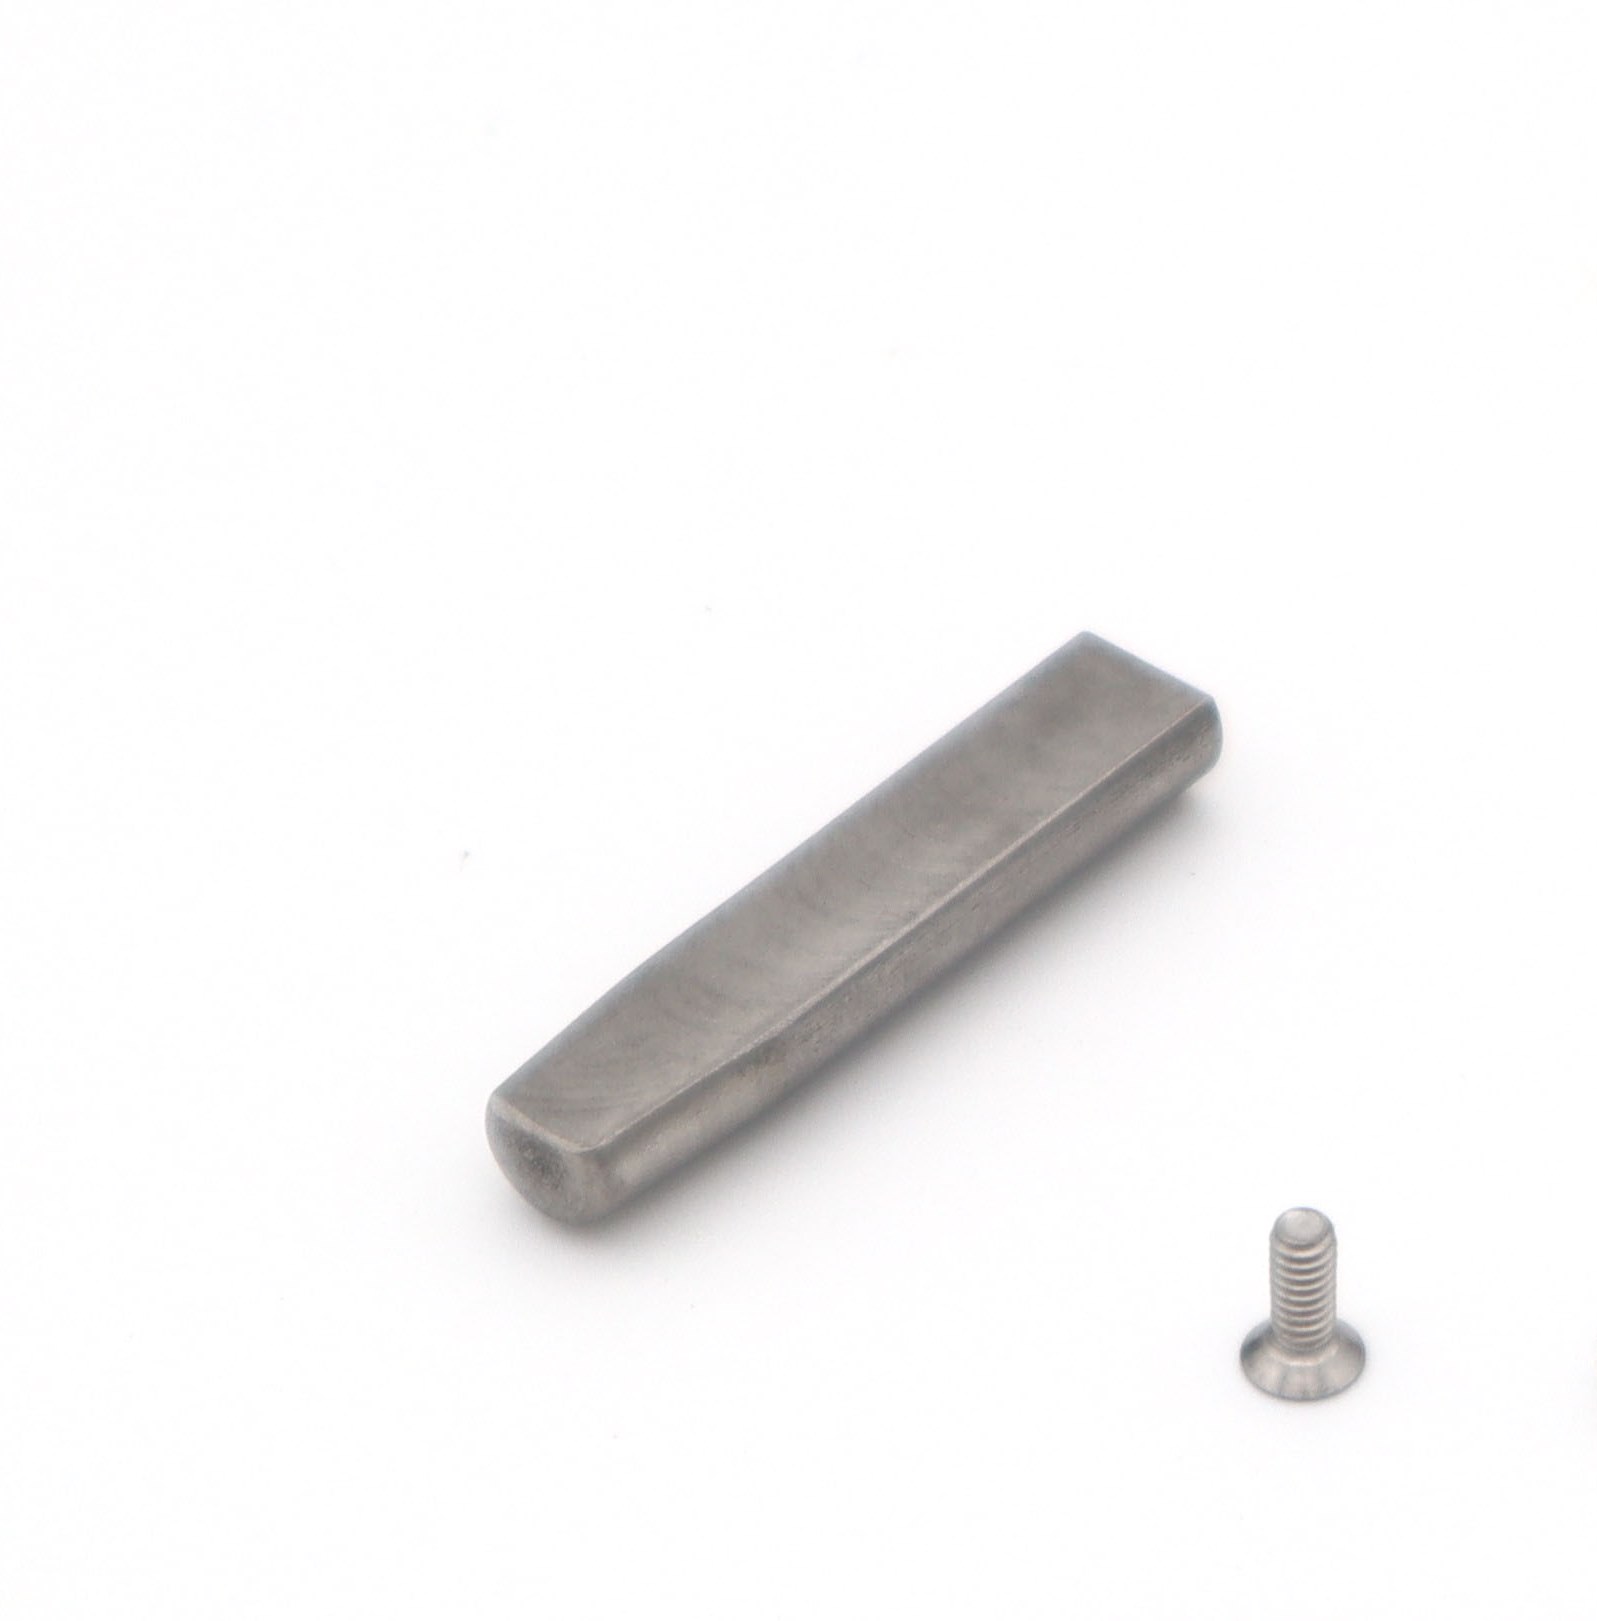 Locking pin backs available on mualcaina.com 🙌🏼 #enamelpins